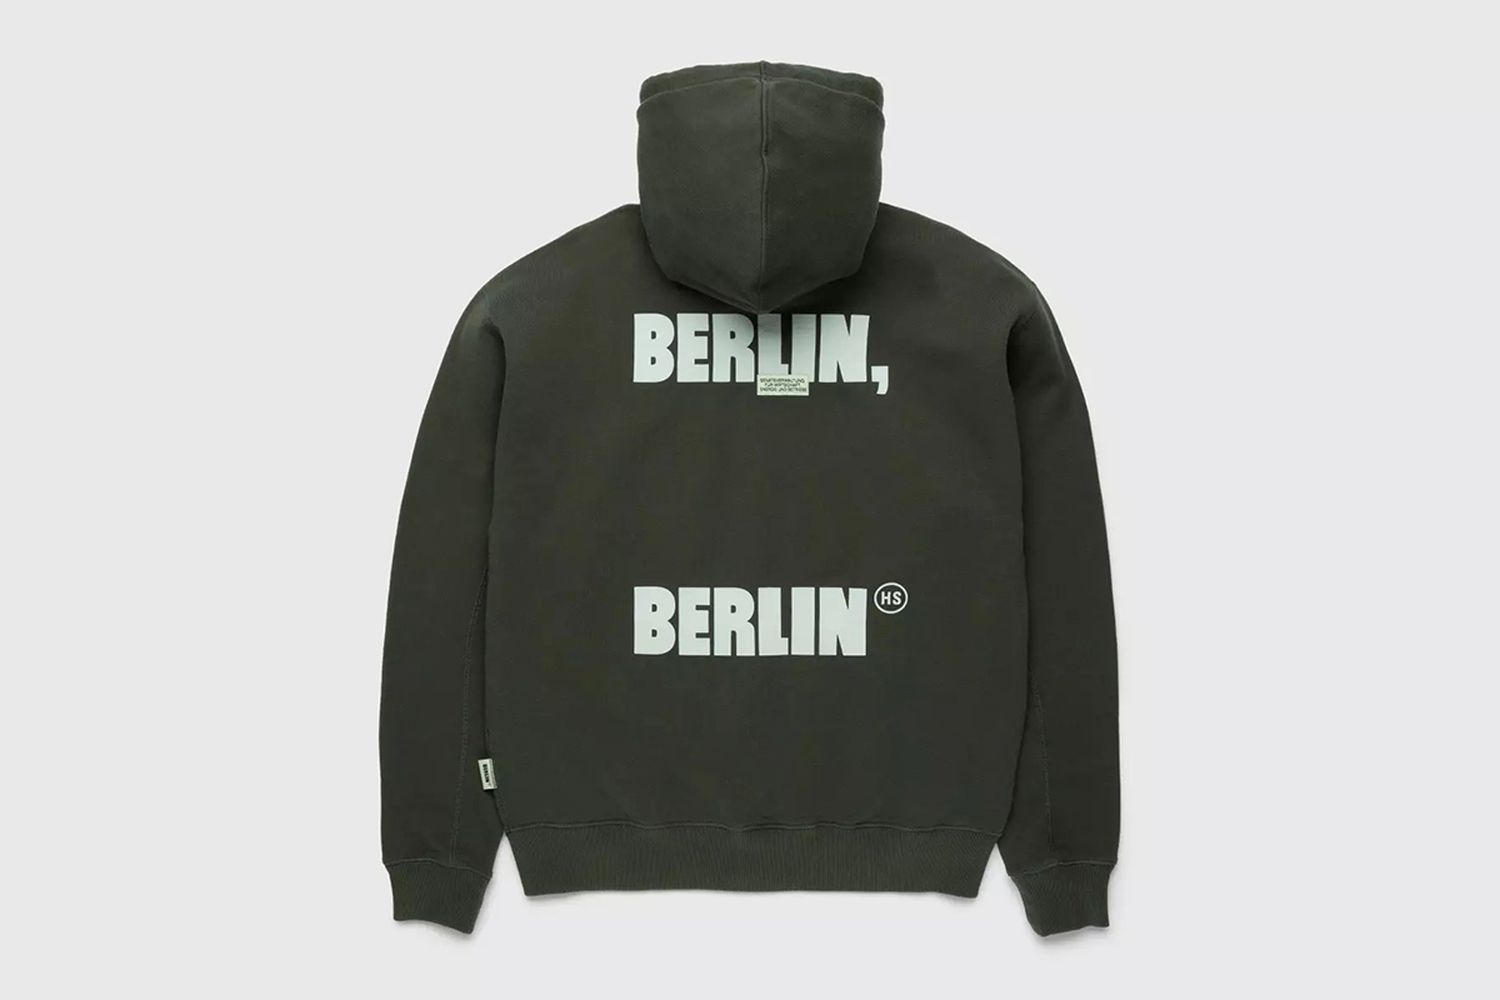 BERLIN, BERLIN 3 Zip Hoodie